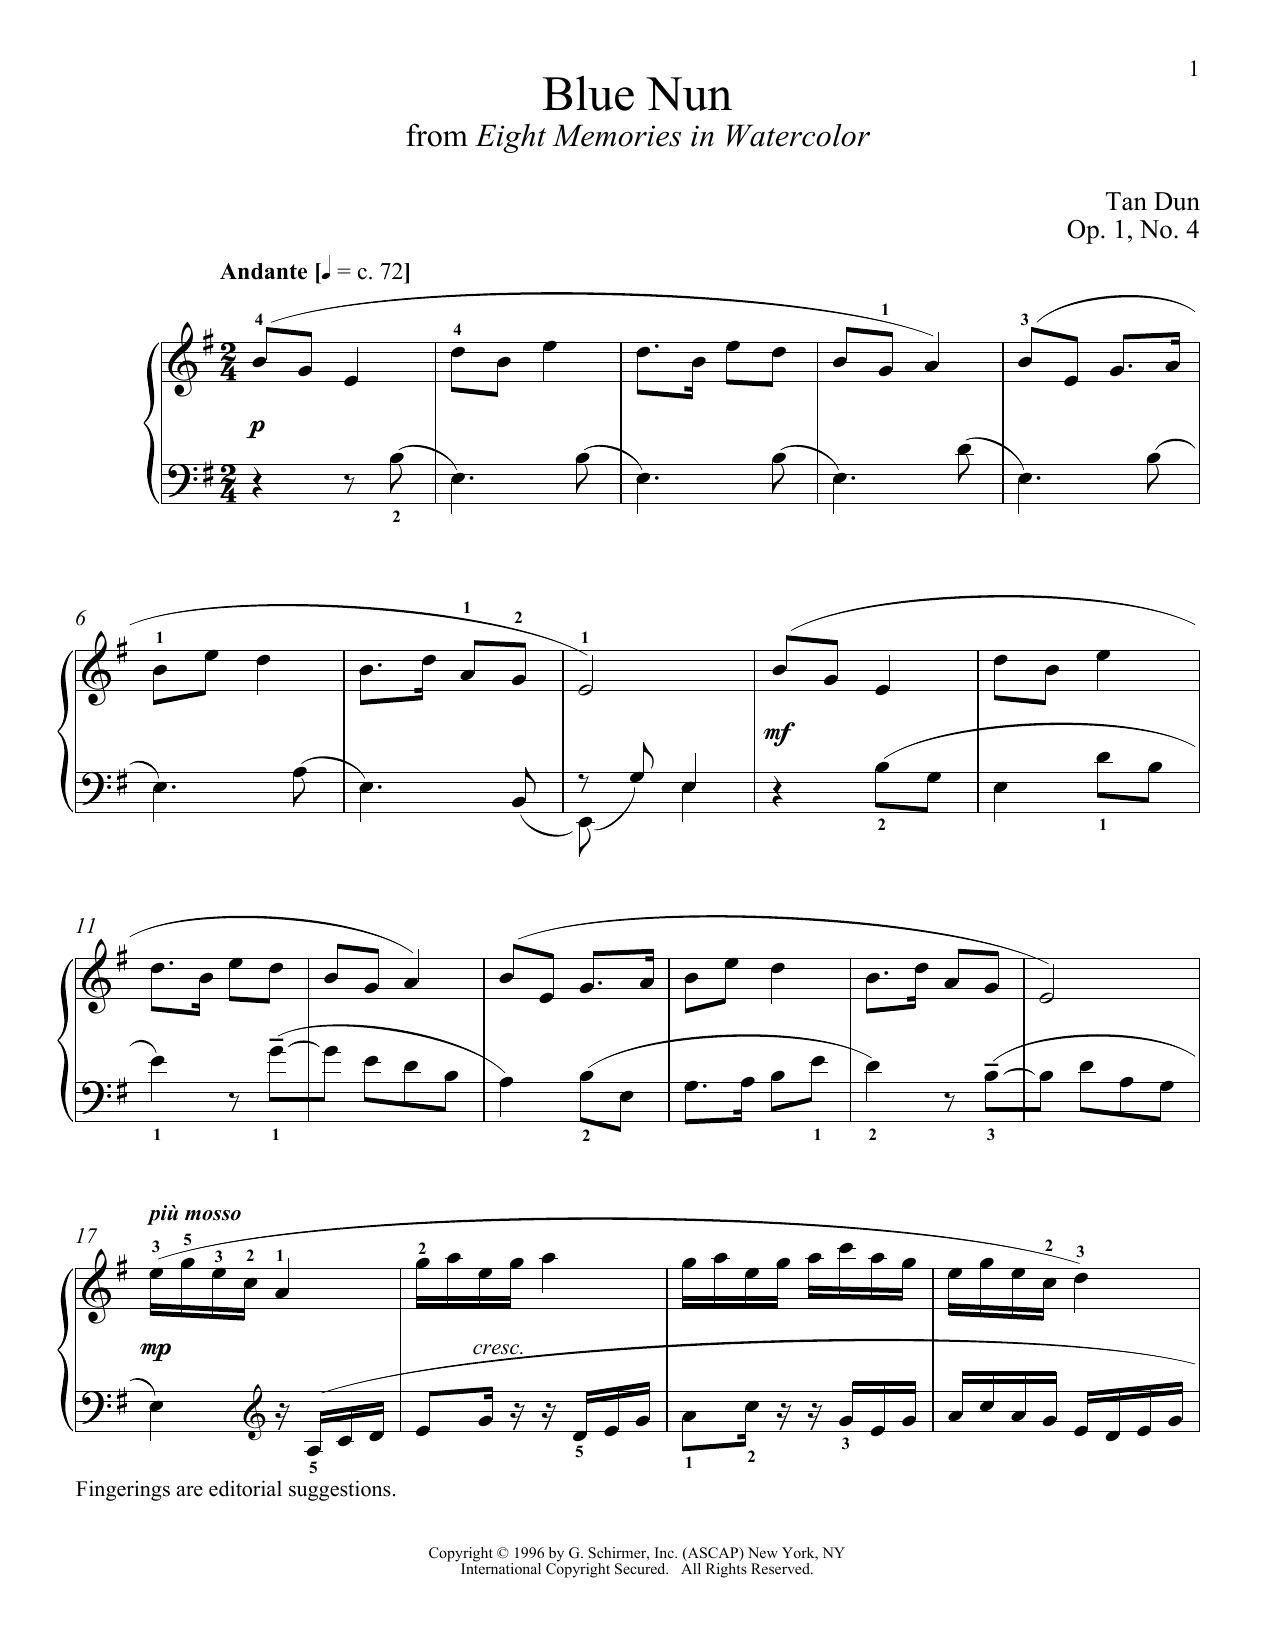 Tan Dun Blue Nun Sheet Music Notes & Chords for Piano - Download or Print PDF